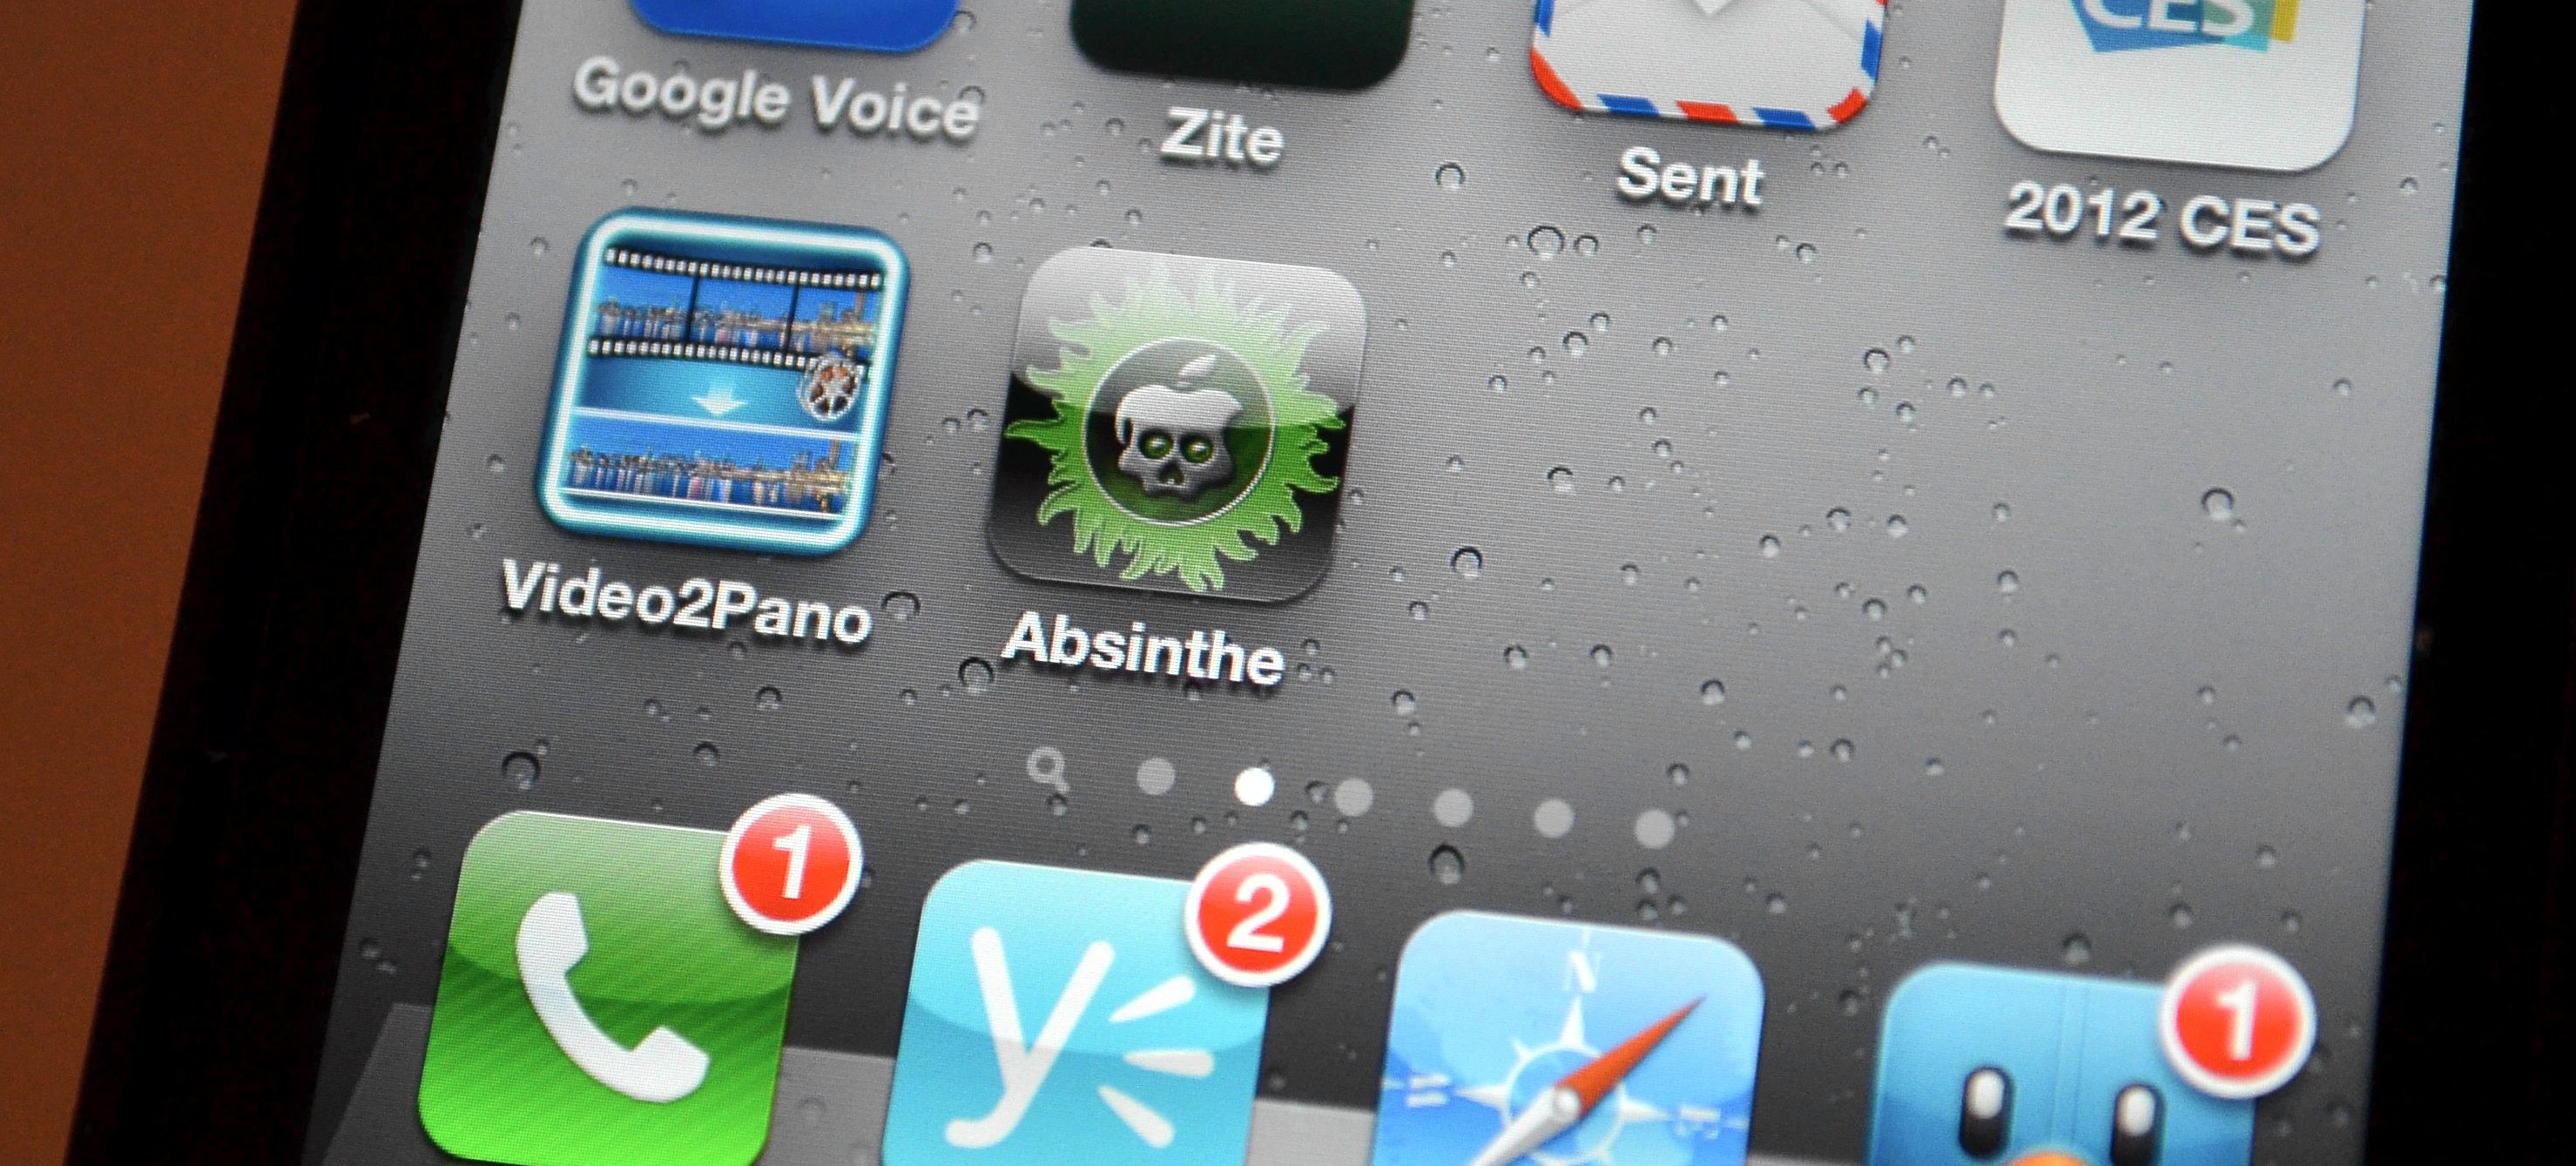 iPhone 4S Absinthe Jailbreak App